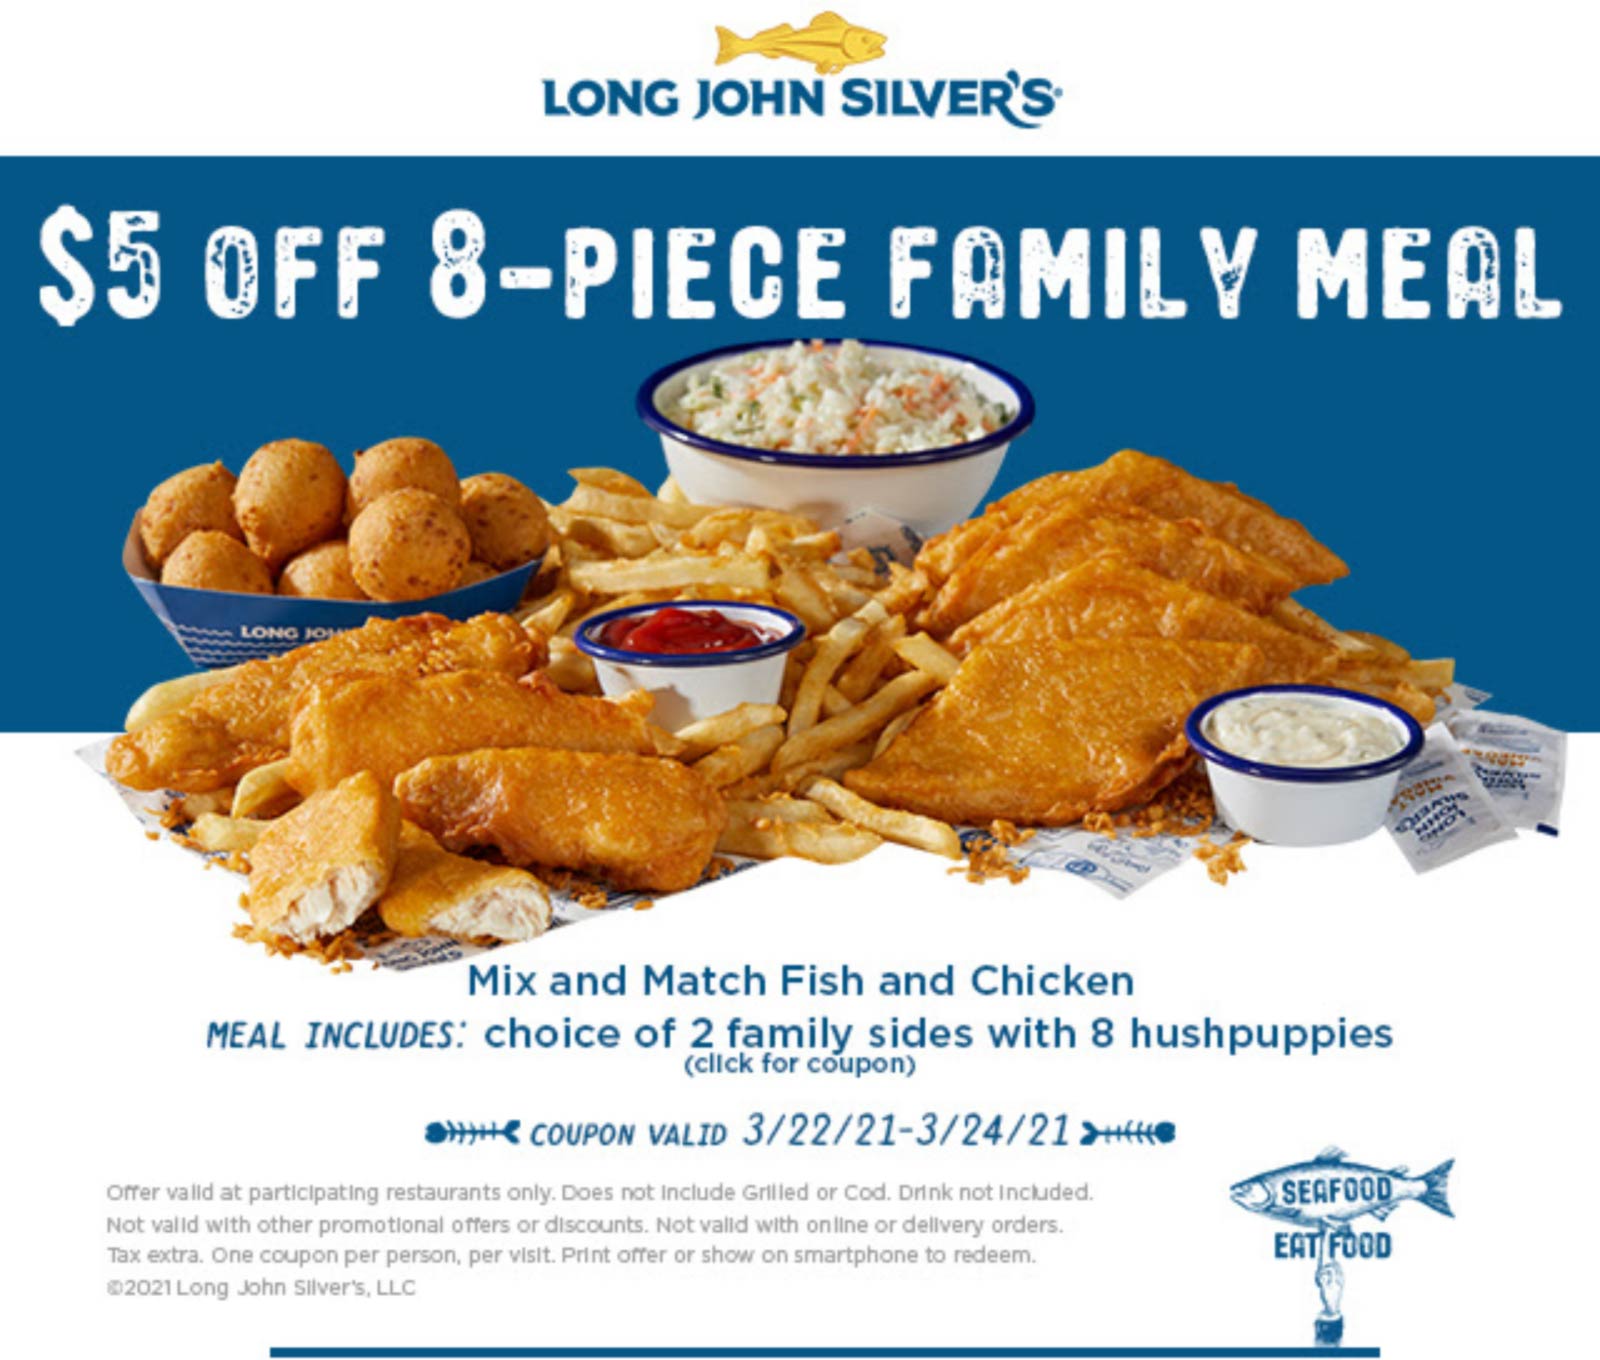 Long John Silvers restaurants Coupon  $5 off 8pc meal at Long John Silvers restaurants #longjohnsilvers 